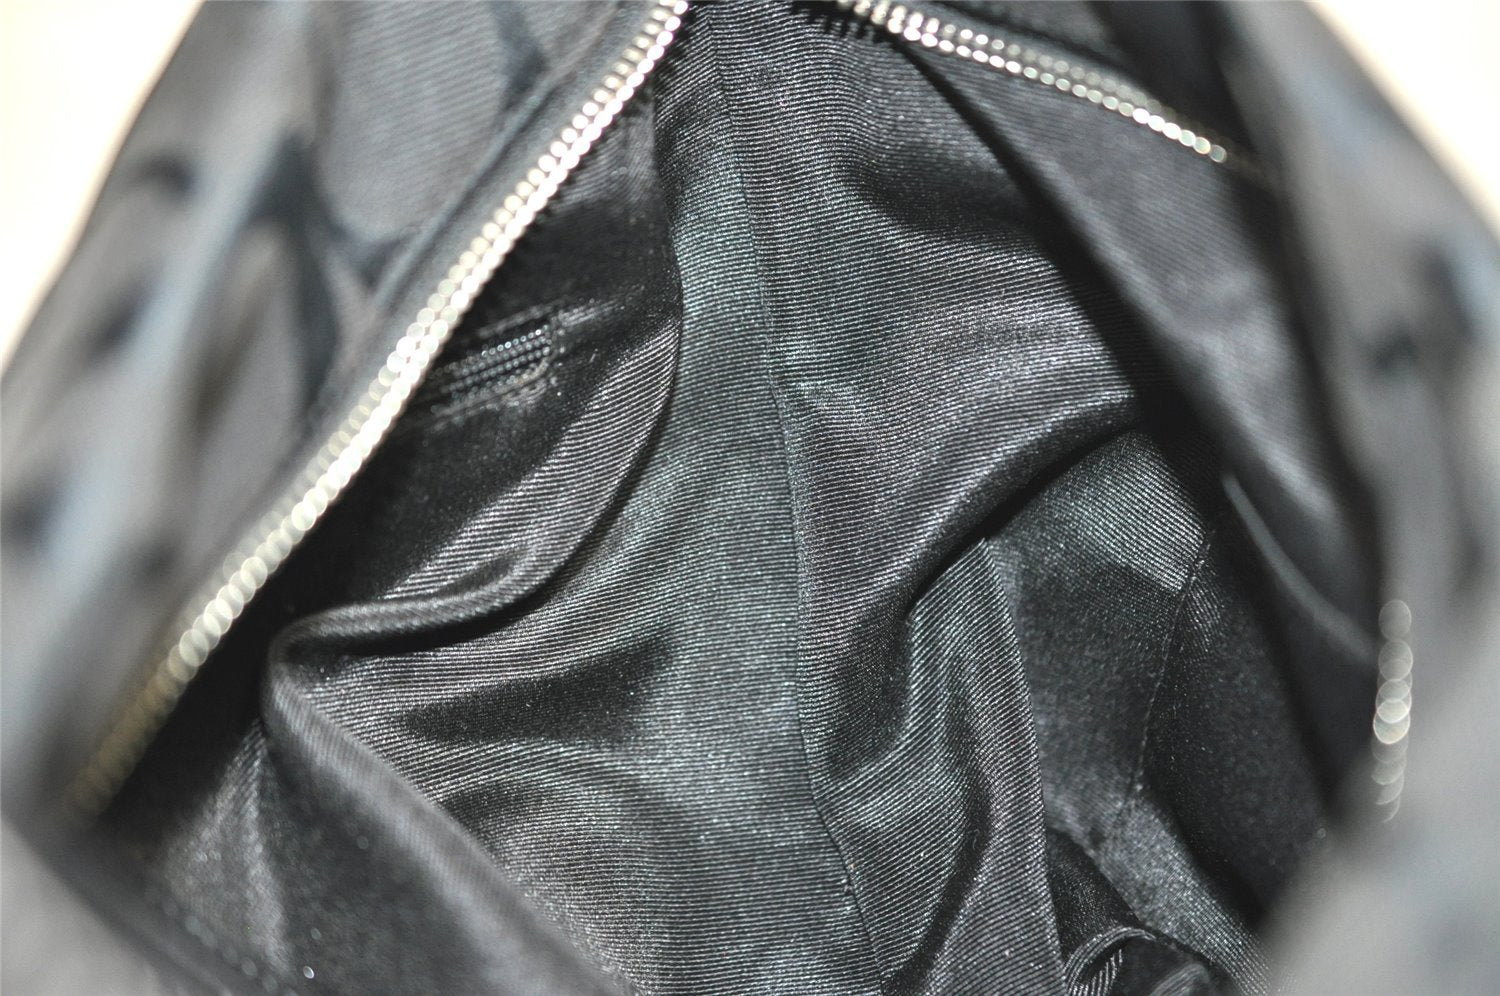 Authentic COACH Signature Shoulder Cross Bag Canvas Leather F15067 Black 2390I